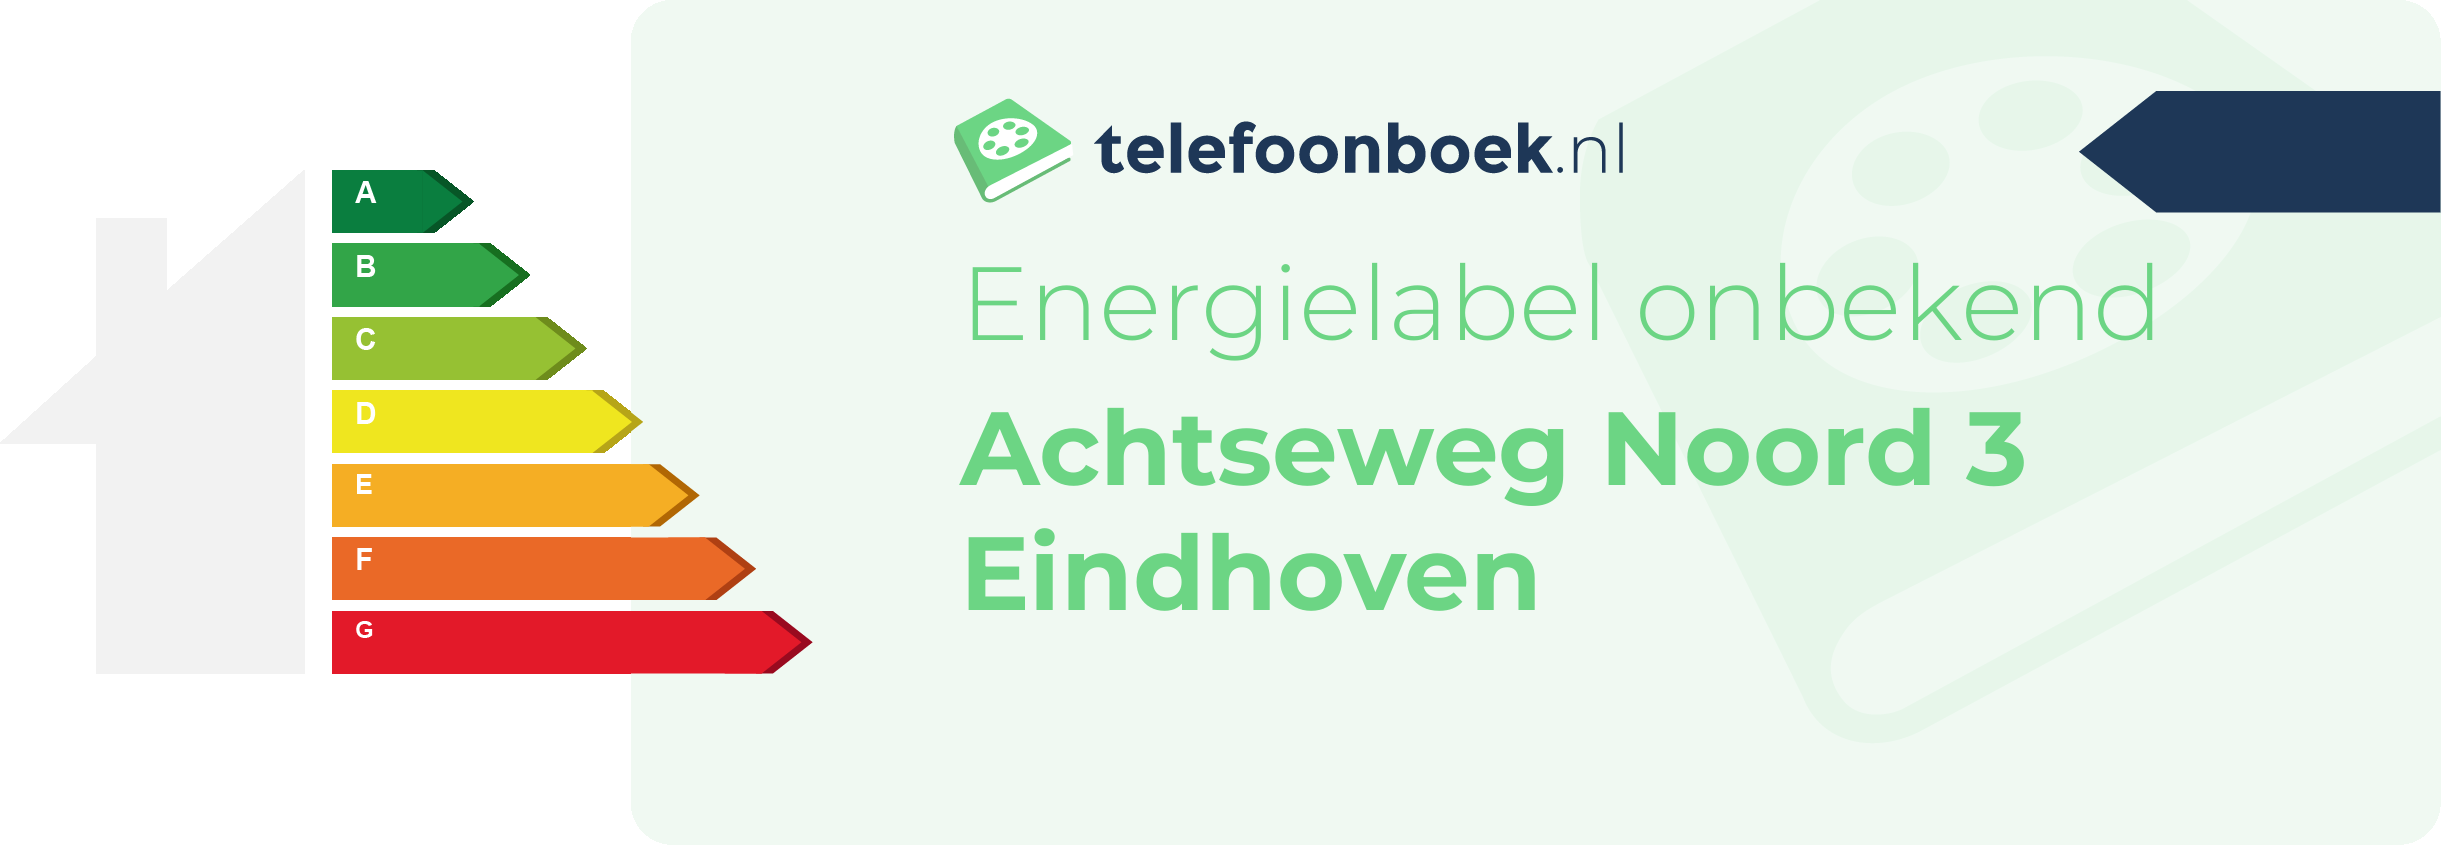 Energielabel Achtseweg Noord 3 Eindhoven